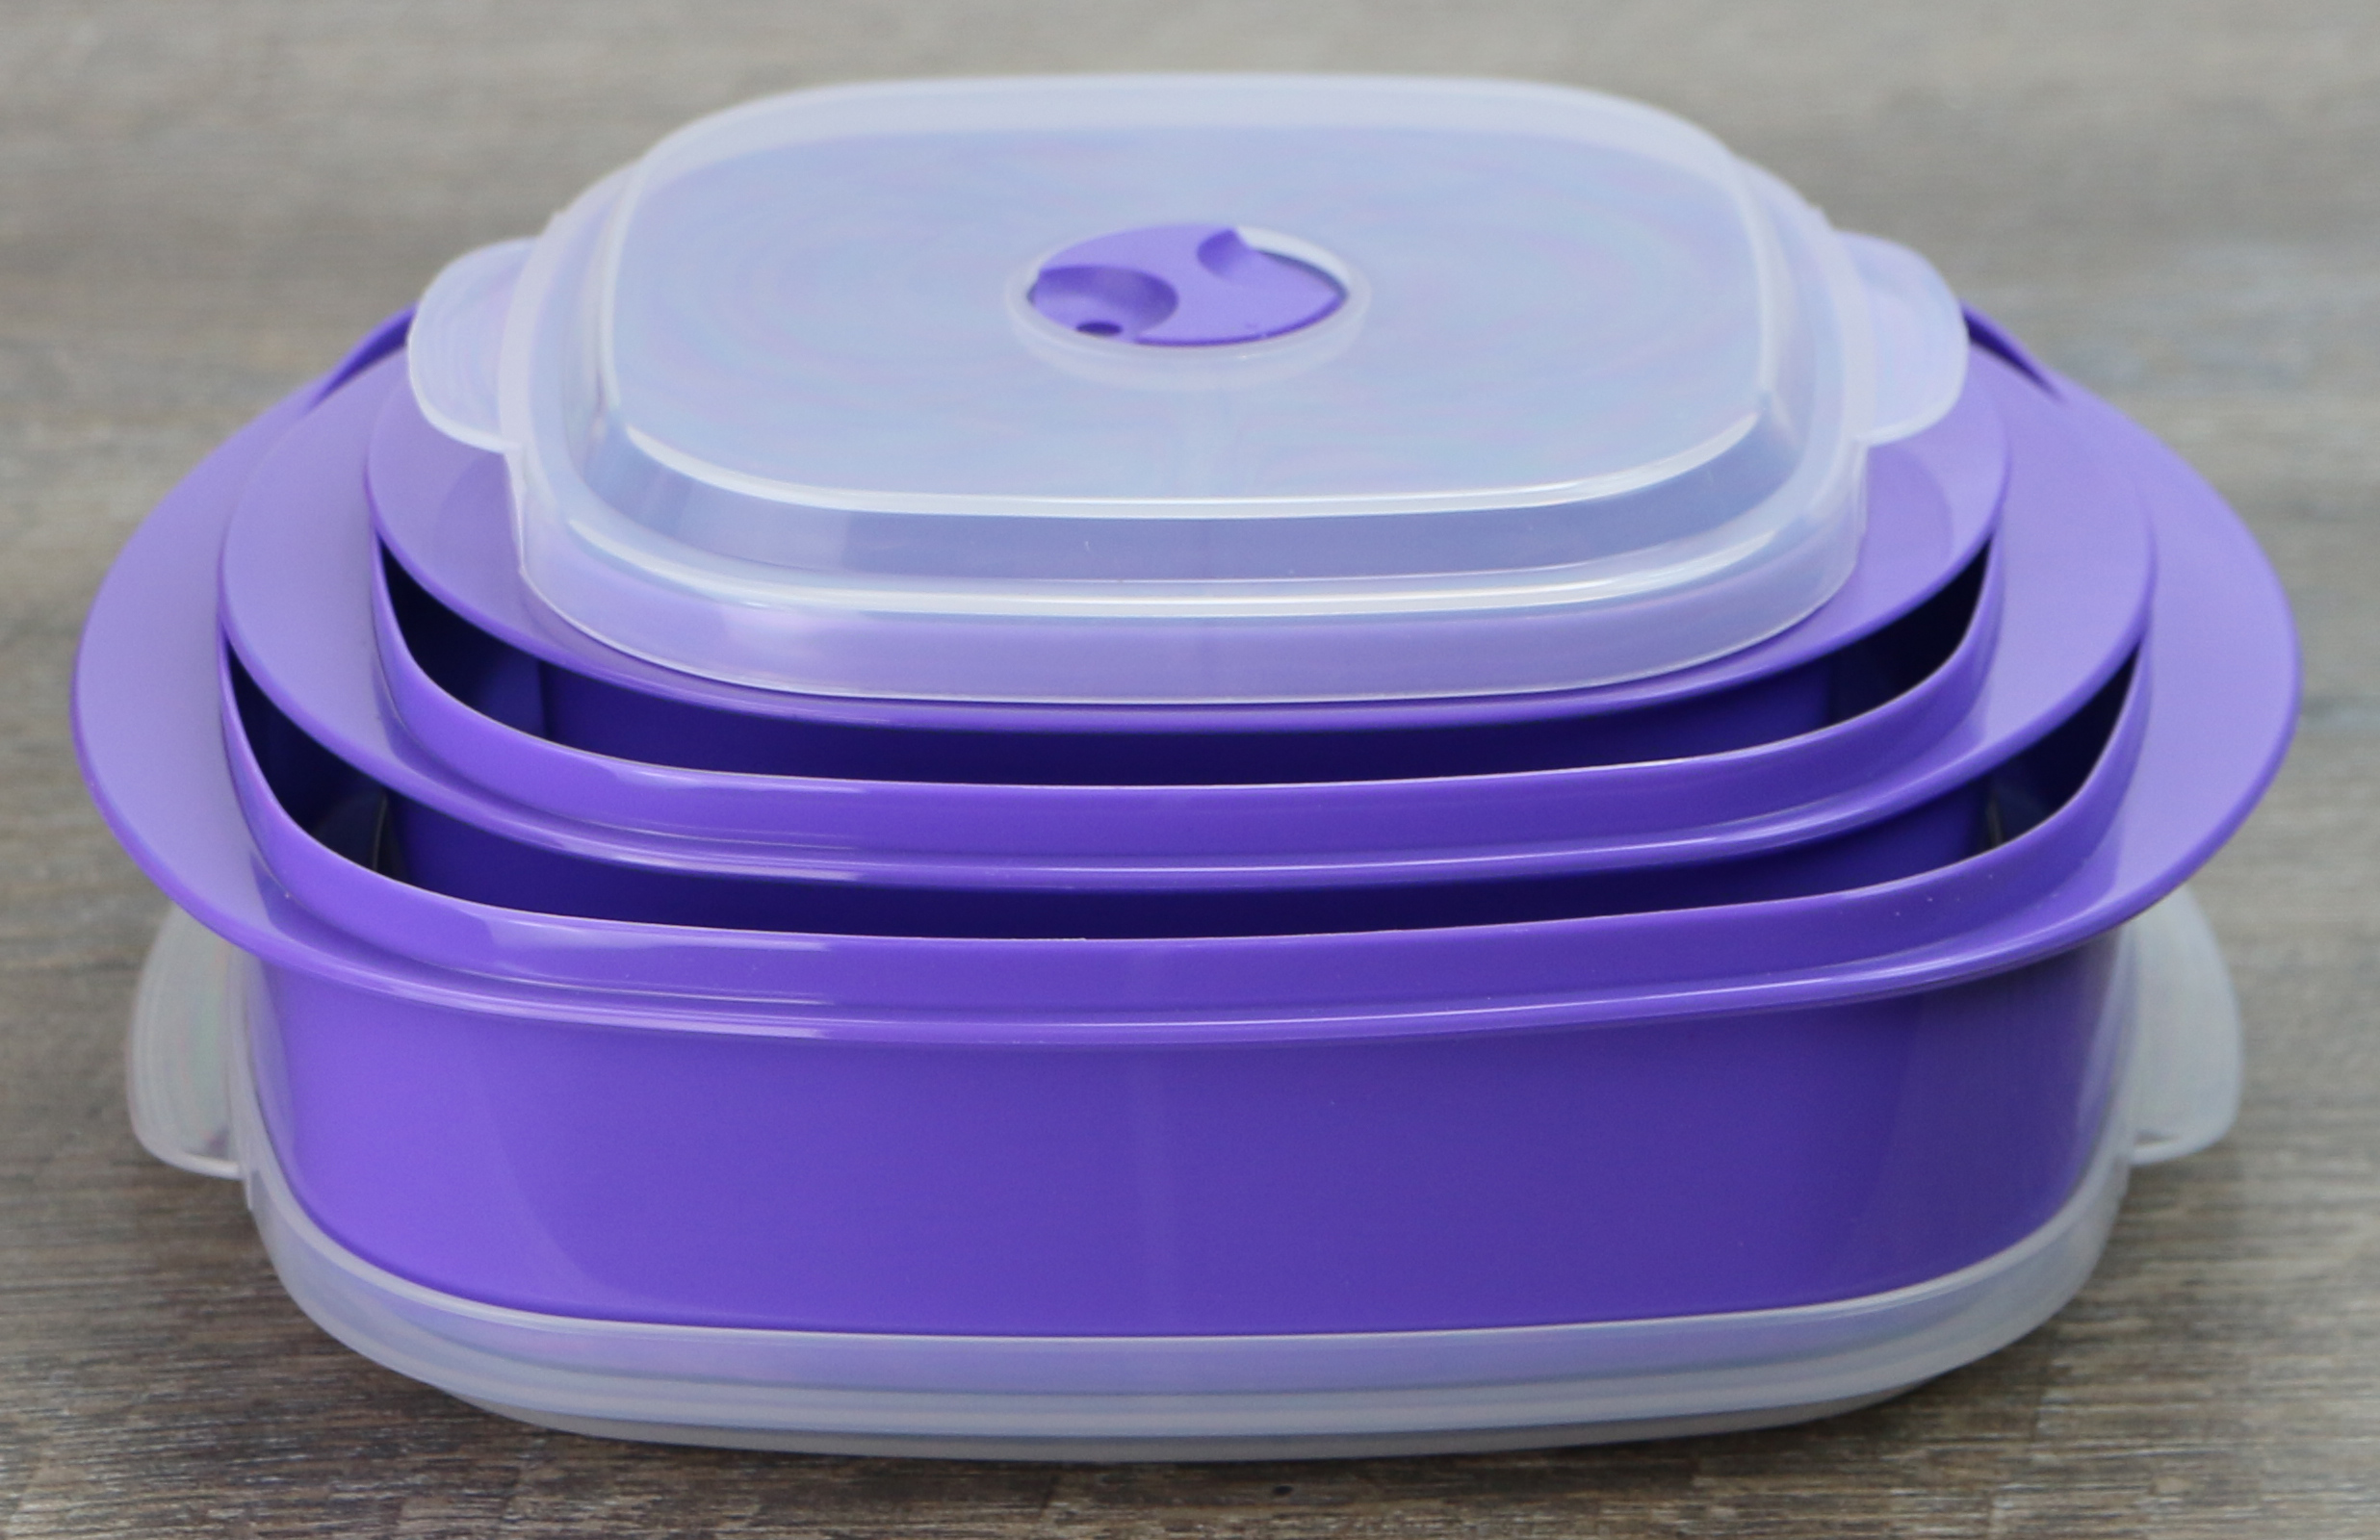 Calypso Basics, Microwave Cookware/ Storage Set, Purple - image 3 of 4